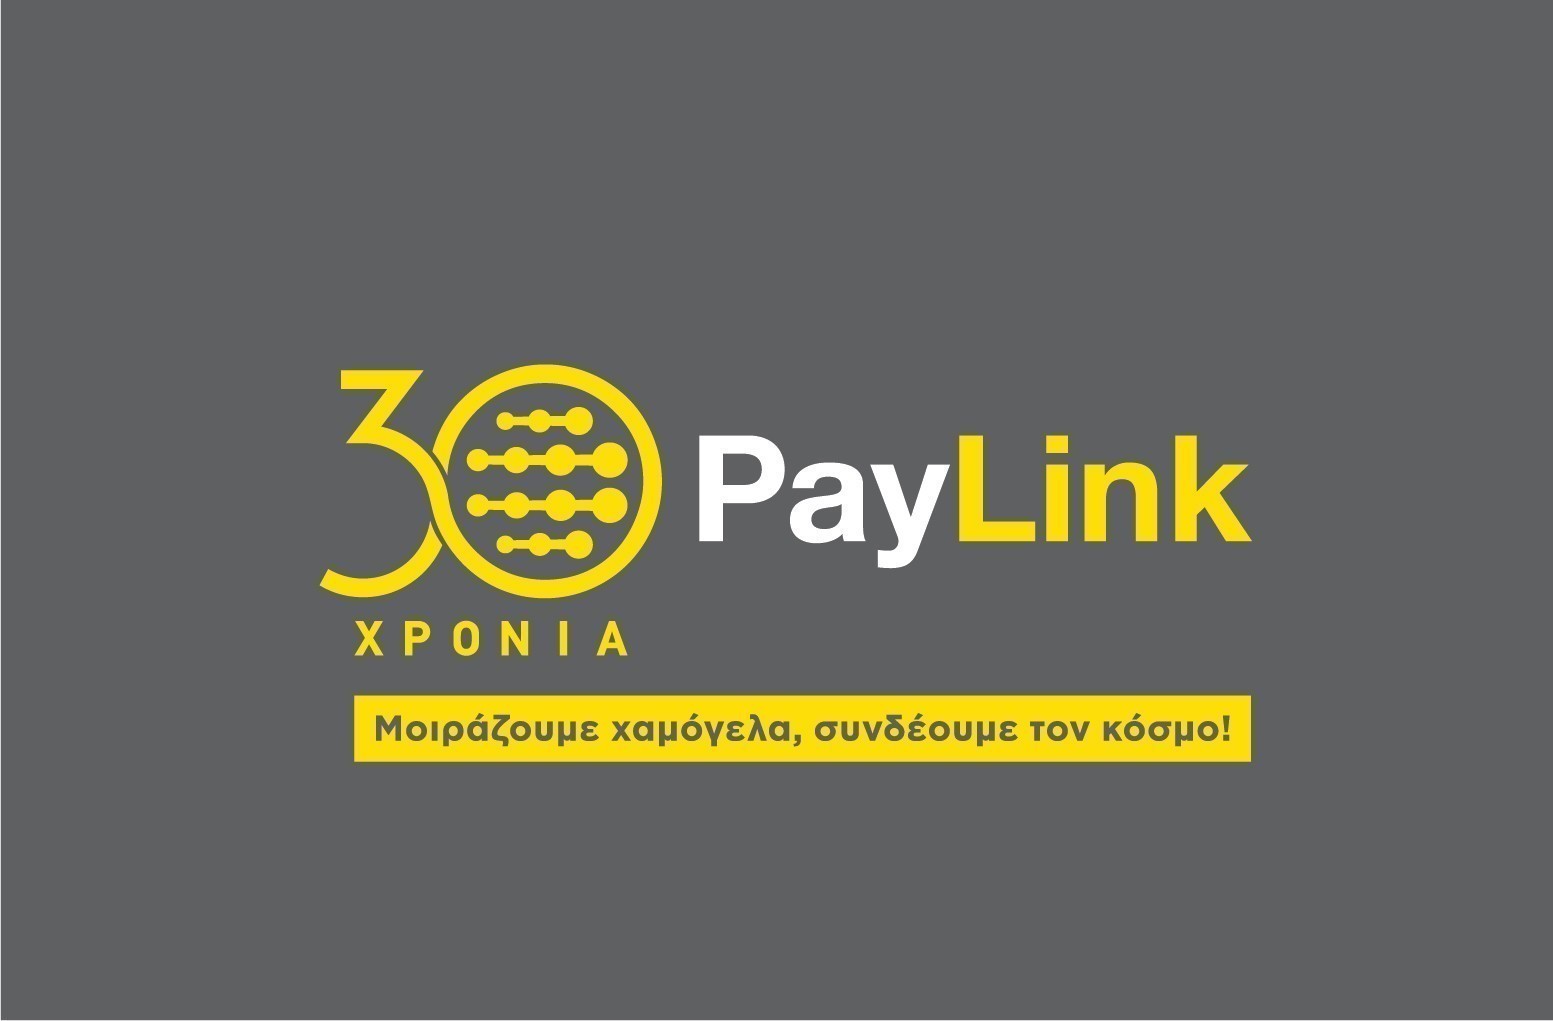 PayLink – Western Union: Έκλεισε 30 χρόνια λειτουργίας στην Ελλάδα – Στόχος η περαιτέρω ανάπτυξη του δικτύου συνεργατών και των υπηρεσιών της